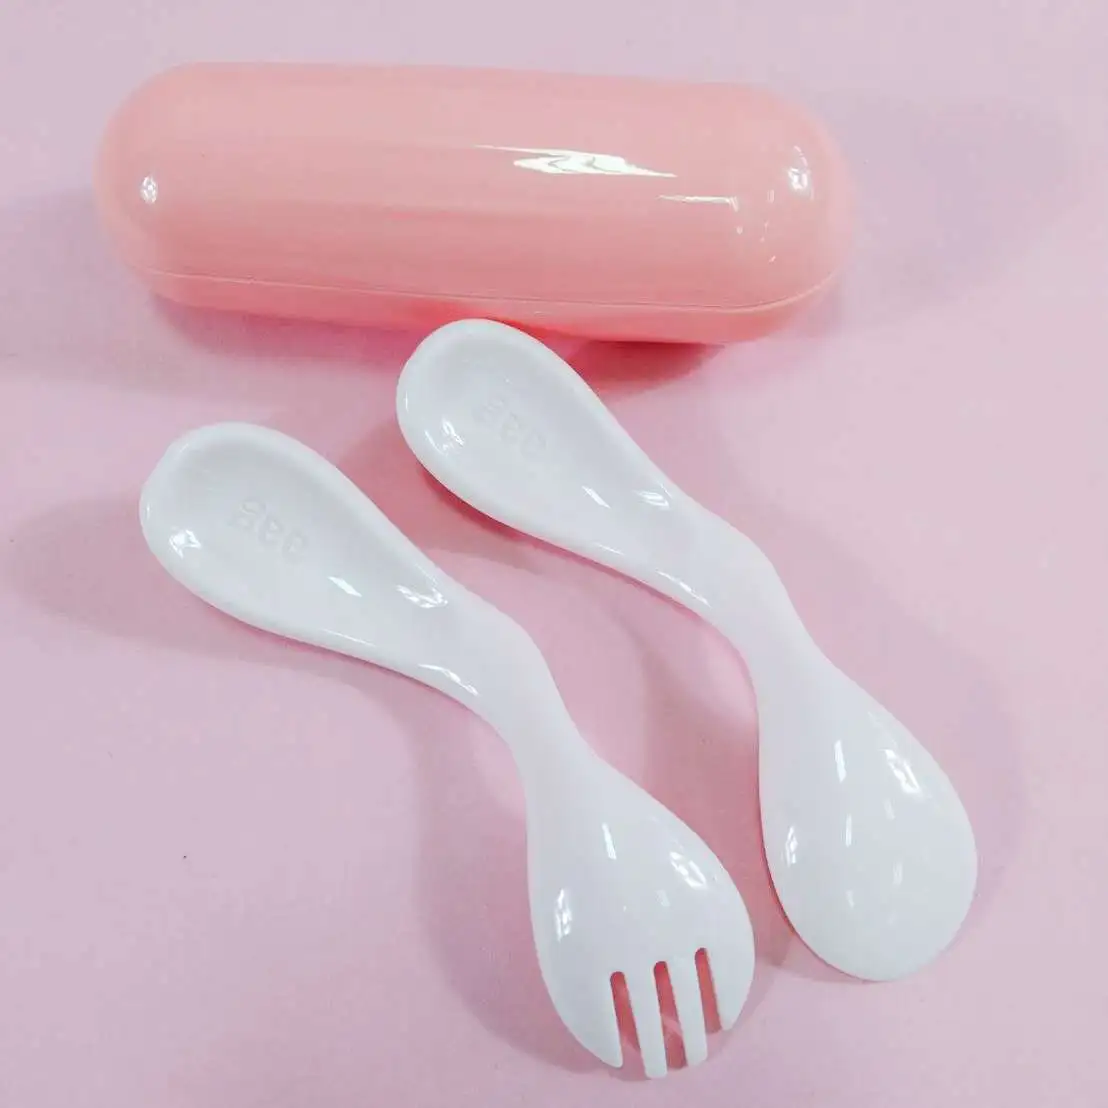 AAG (เอเอจี) 317 Baby soft spoon & fork set for training with travel case ชุดช้อนส้อมทานอาหารสำหรับเด็ก $80